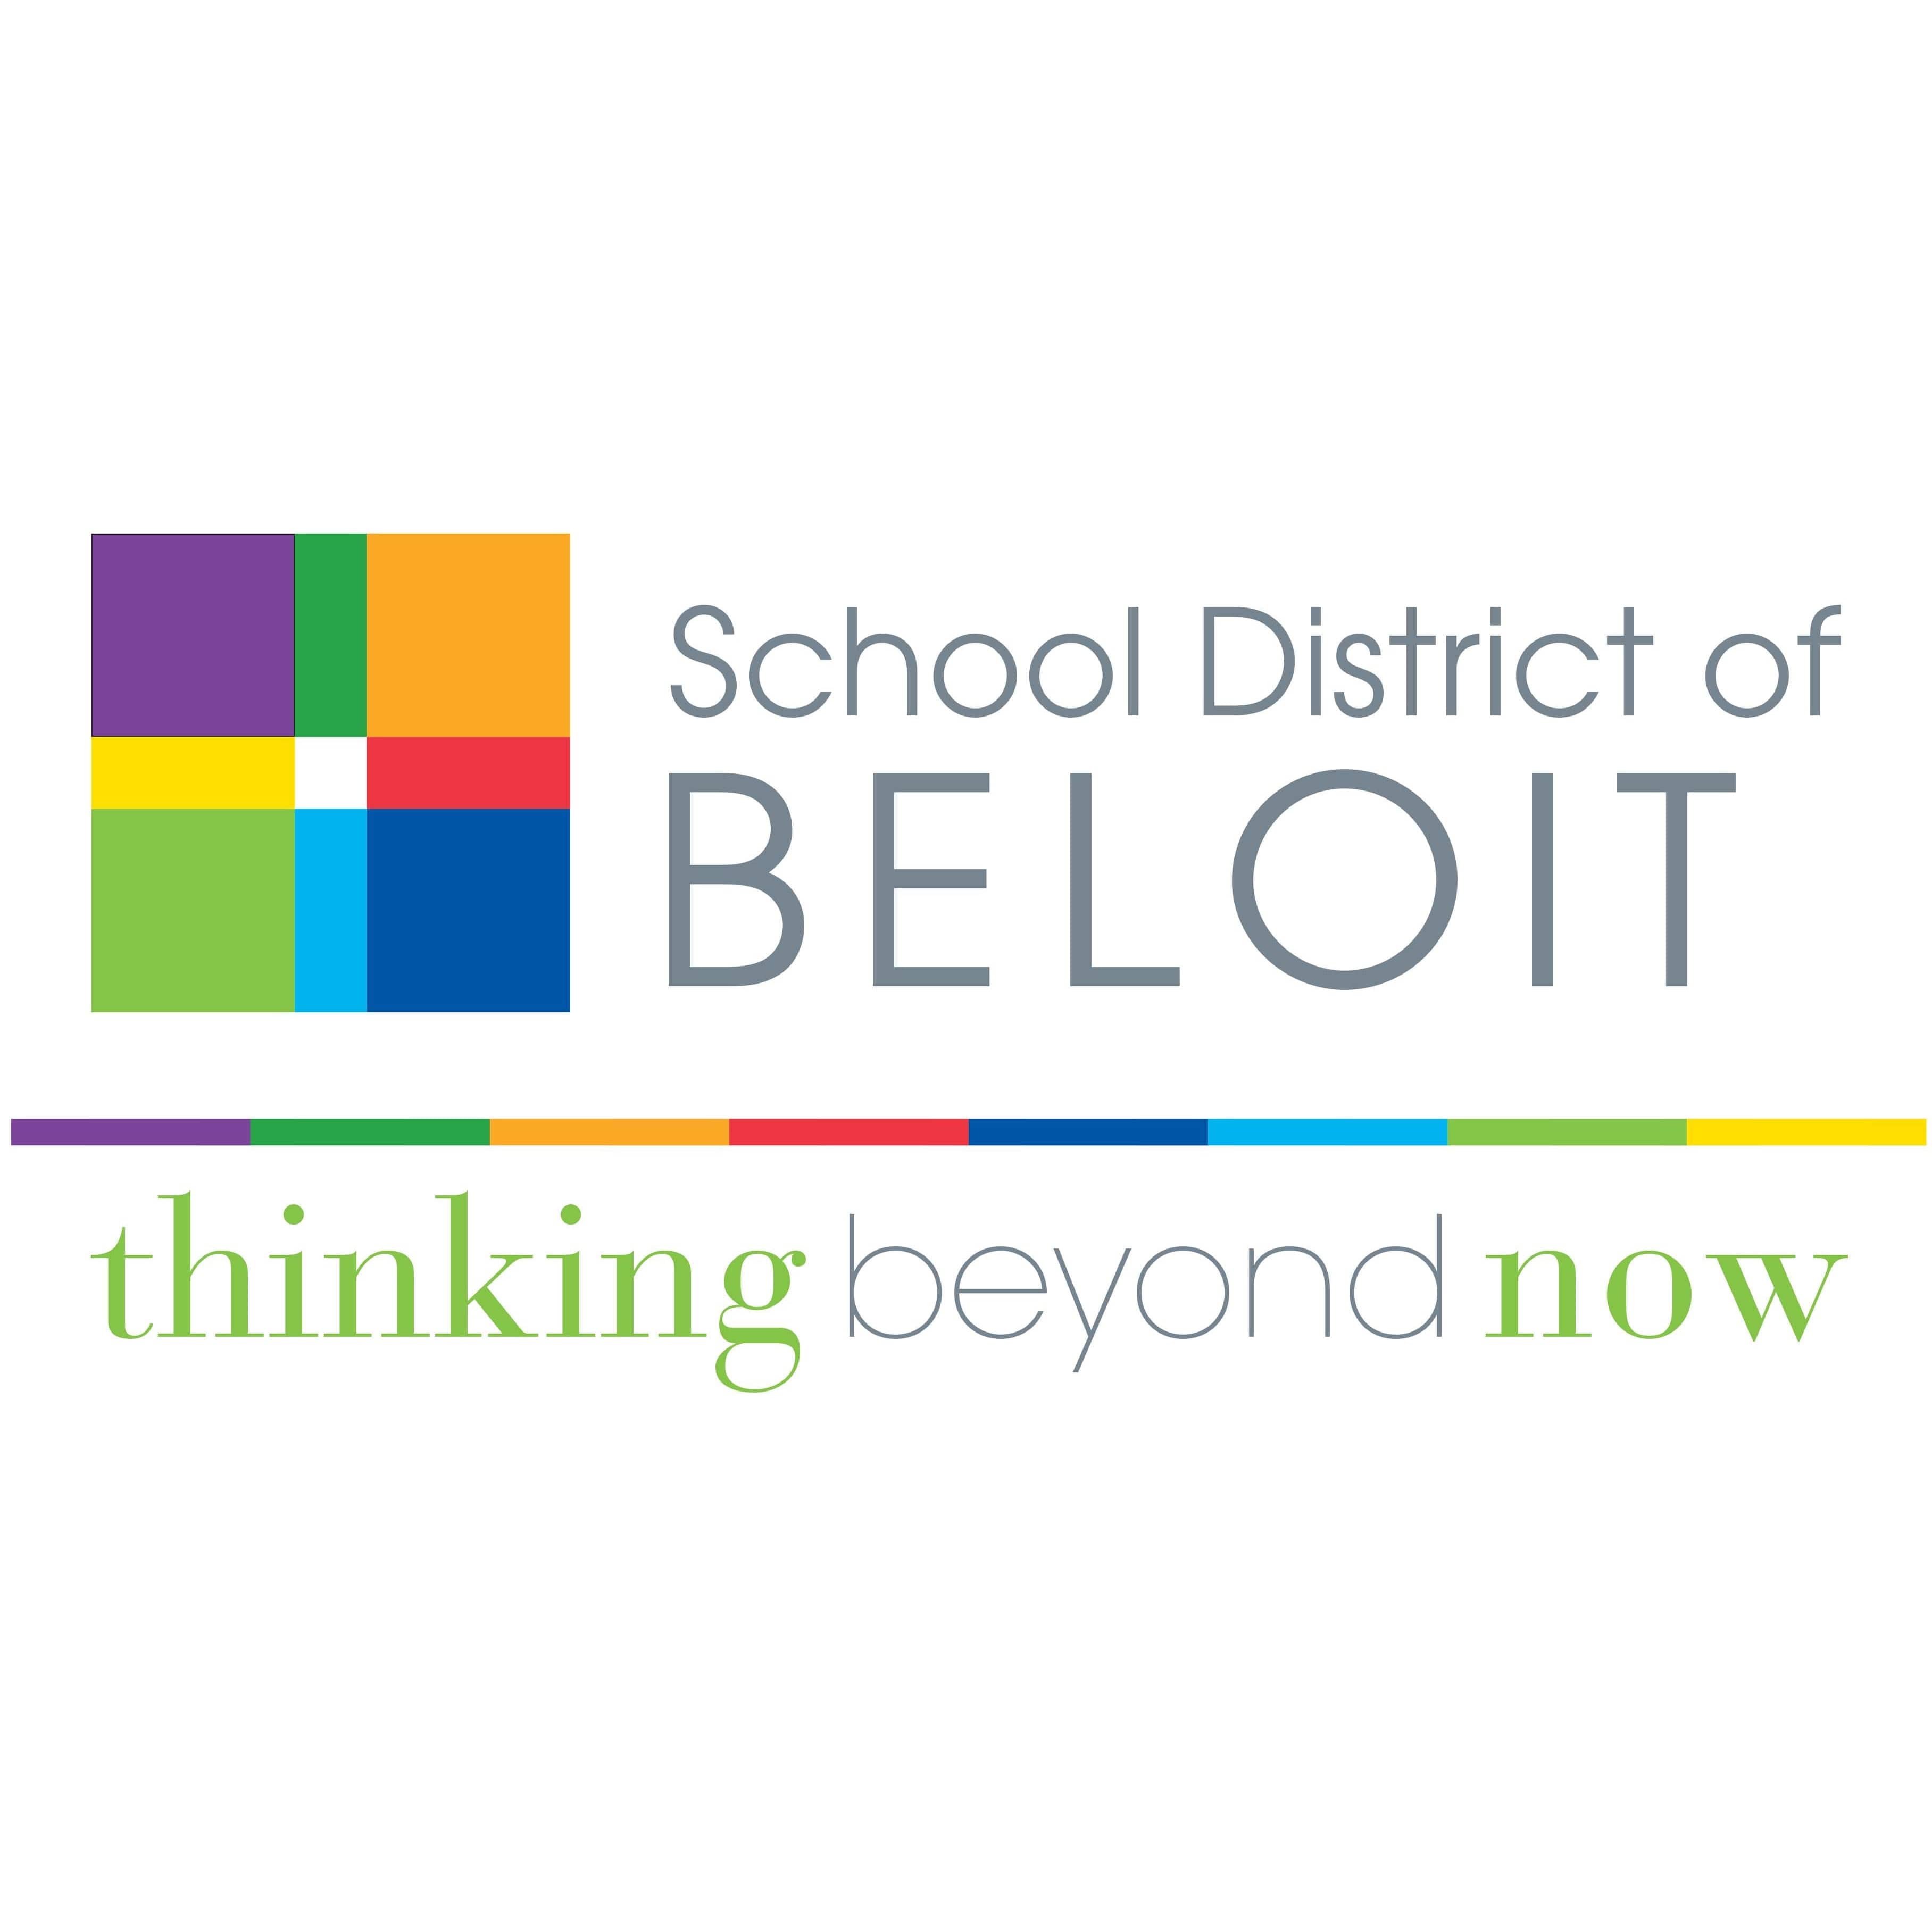 school-district-of-beloit-logo-full-square-5